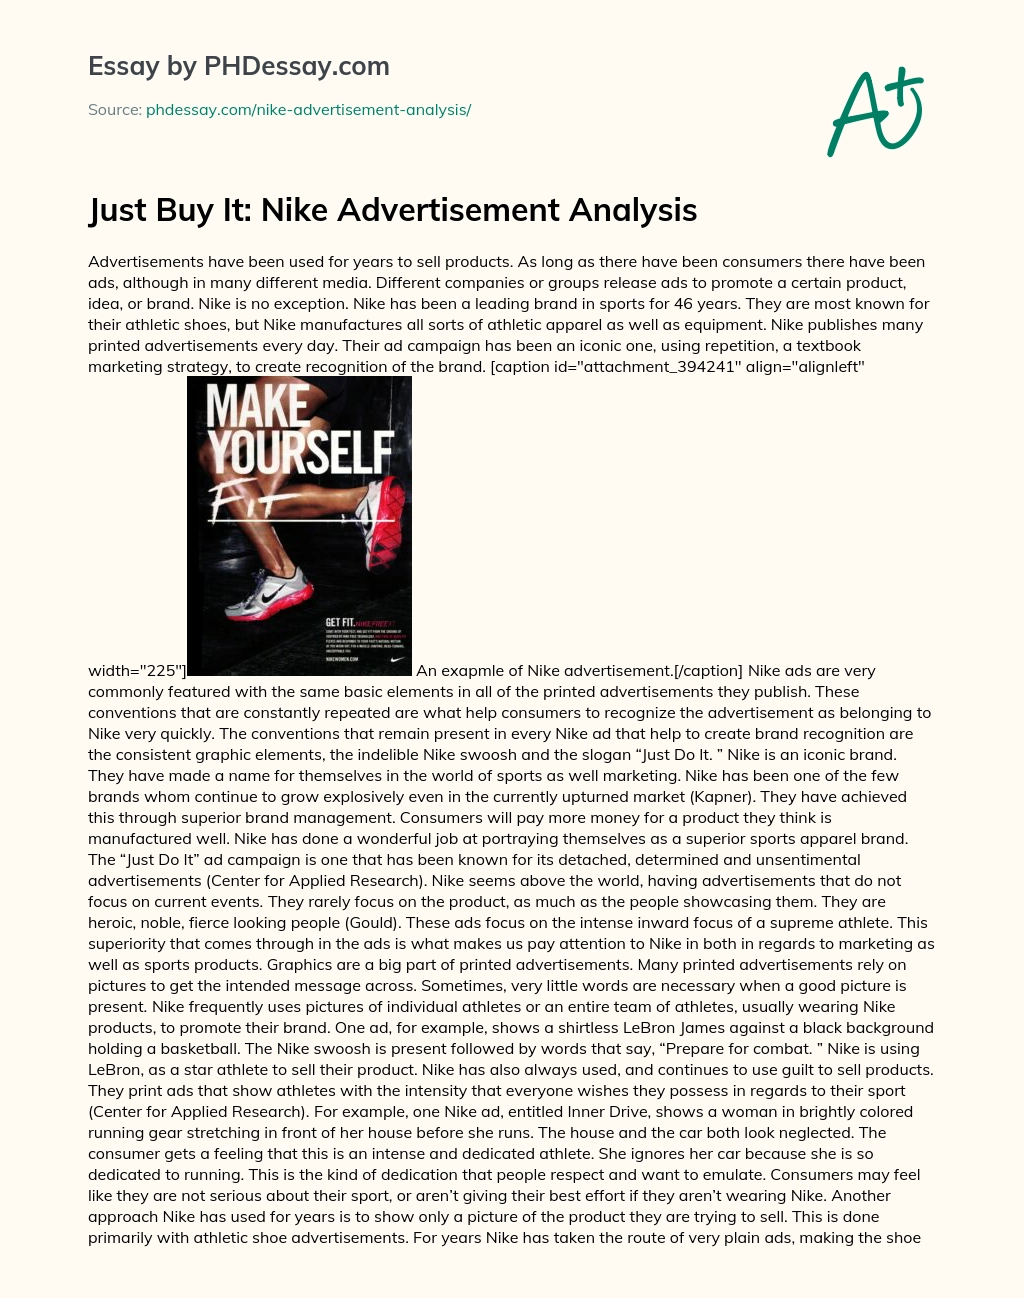 Just Buy It: Nike Advertisement Analysis essay